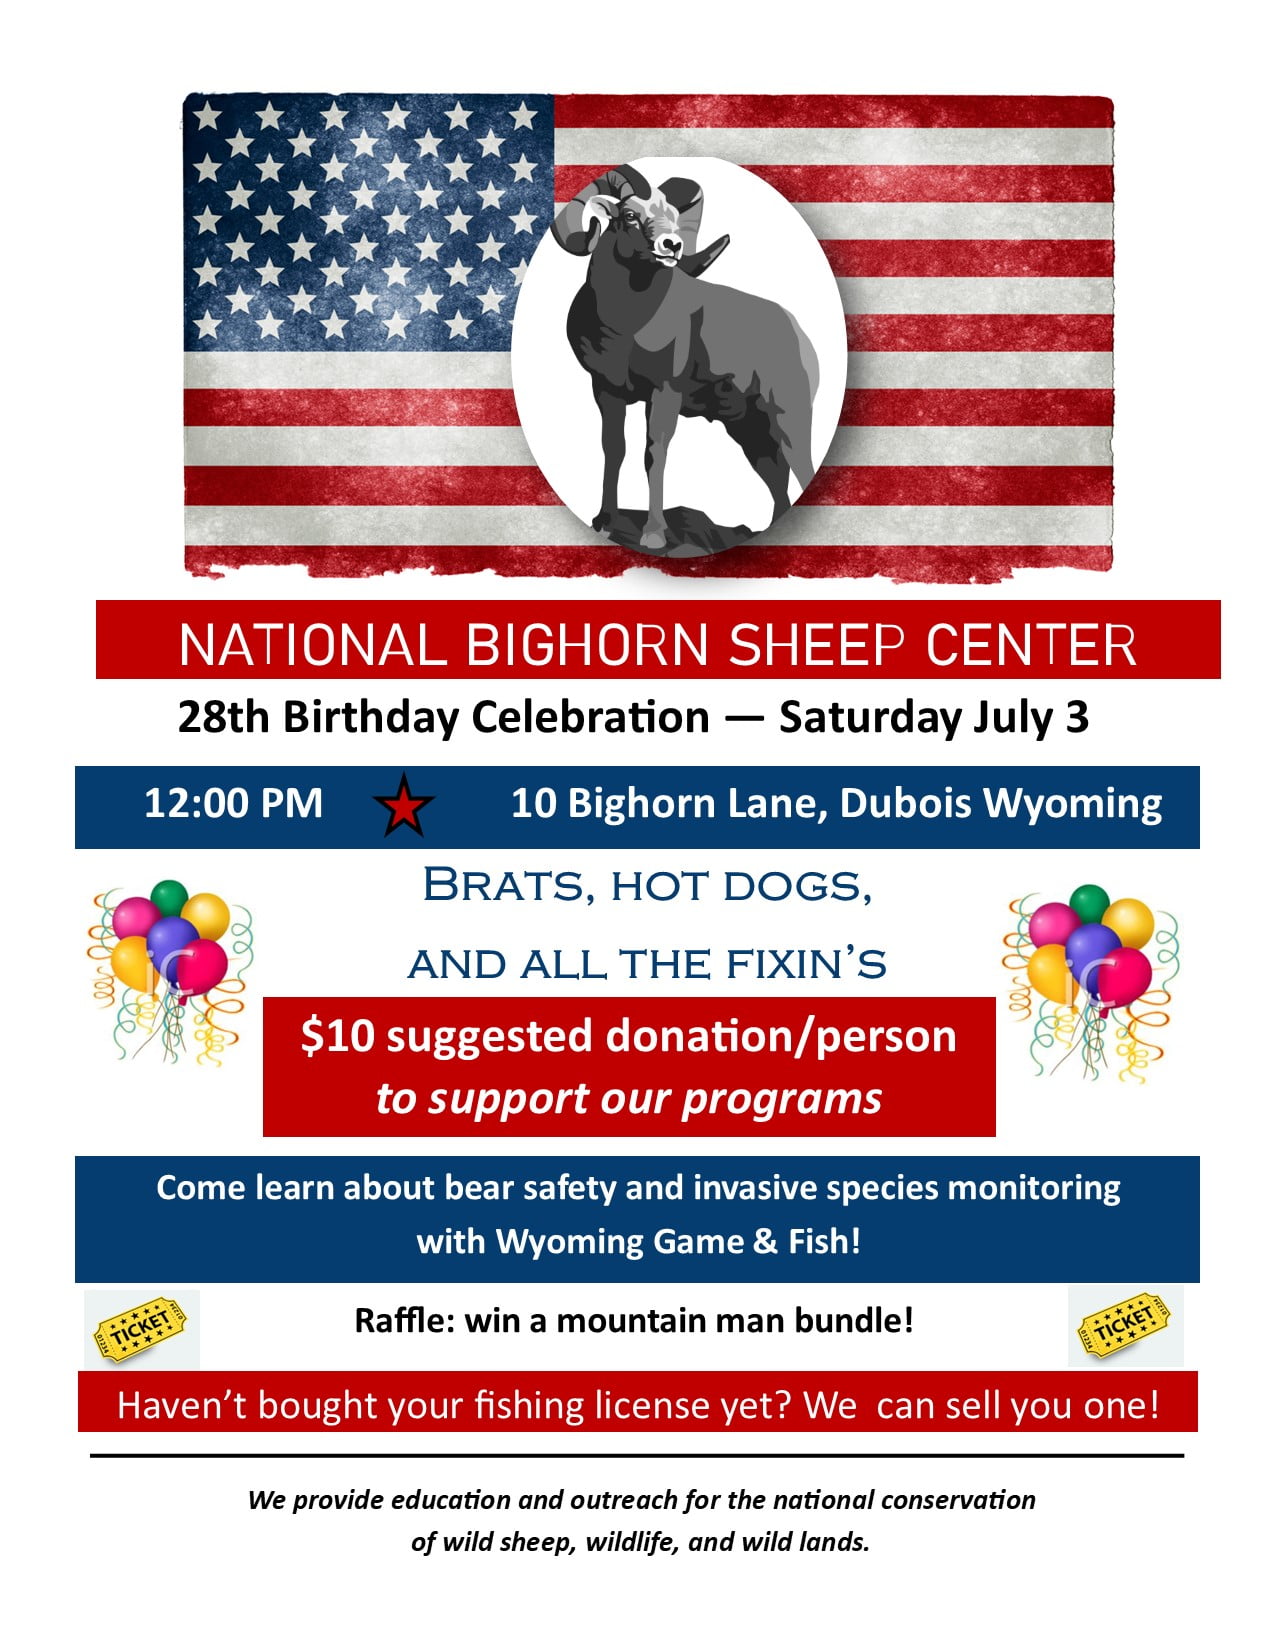 National Bighorn Sheep Center's 28th Birthday Celebration